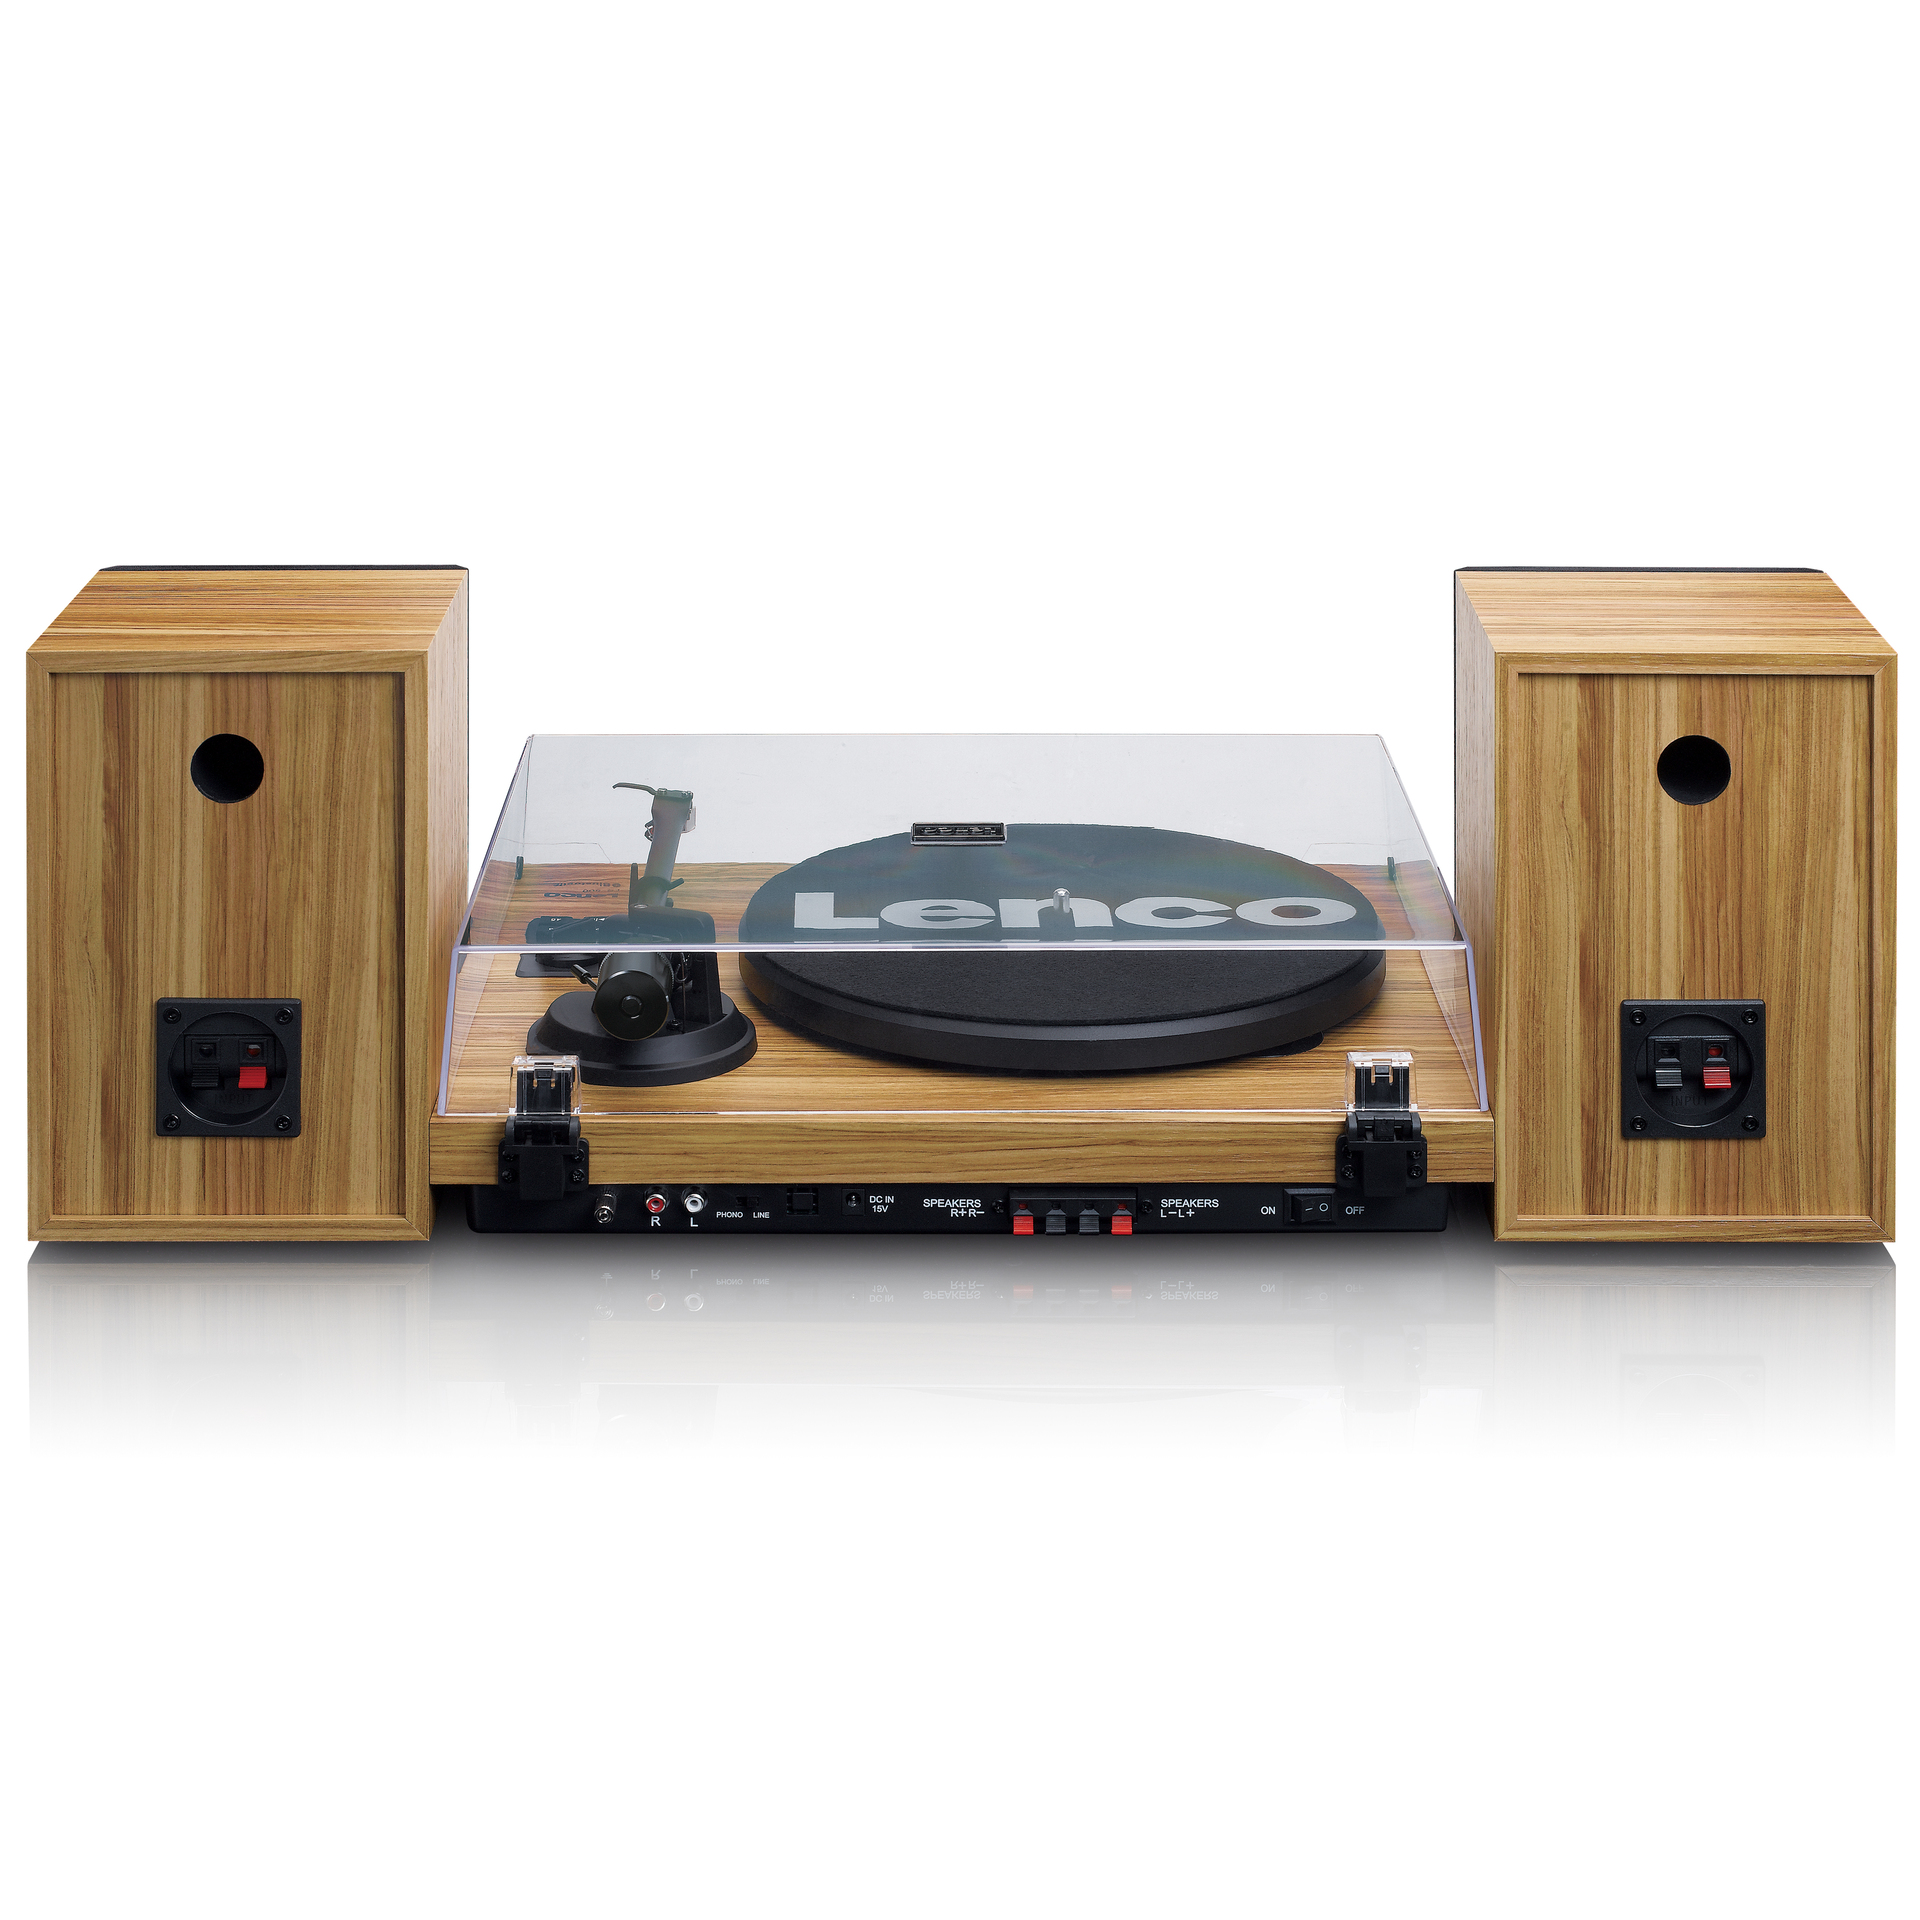 LENCO Holz-Plattenspieler Bluetooth Lautsprecherset 60W Riemenantrieb  Auto-Stop